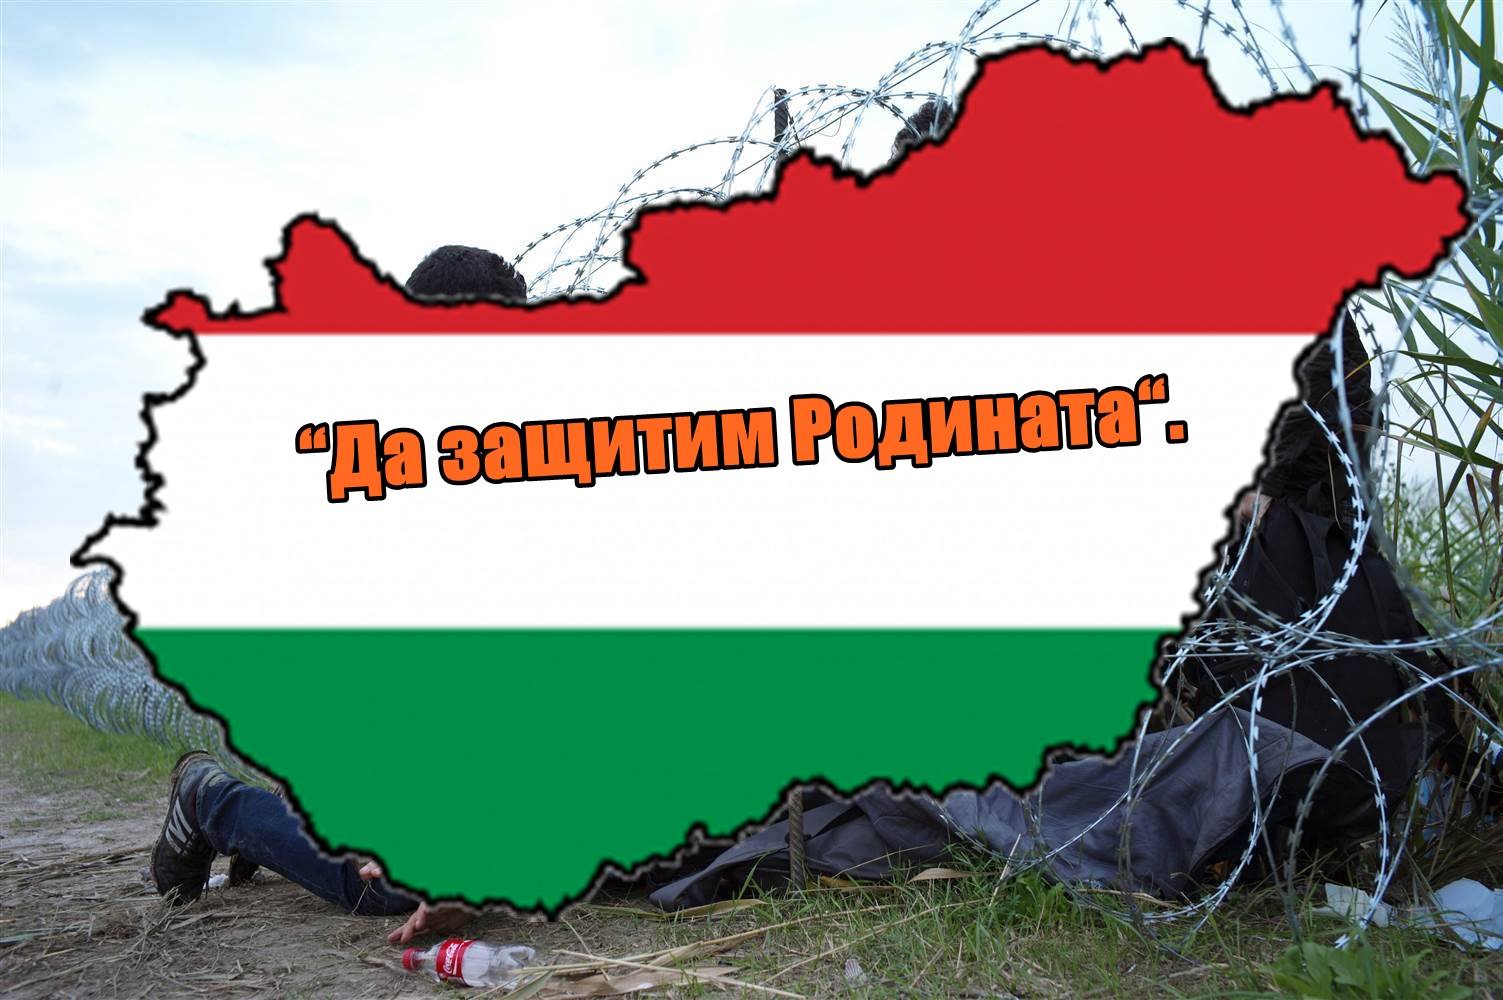 Унгария каза да защитим Родината